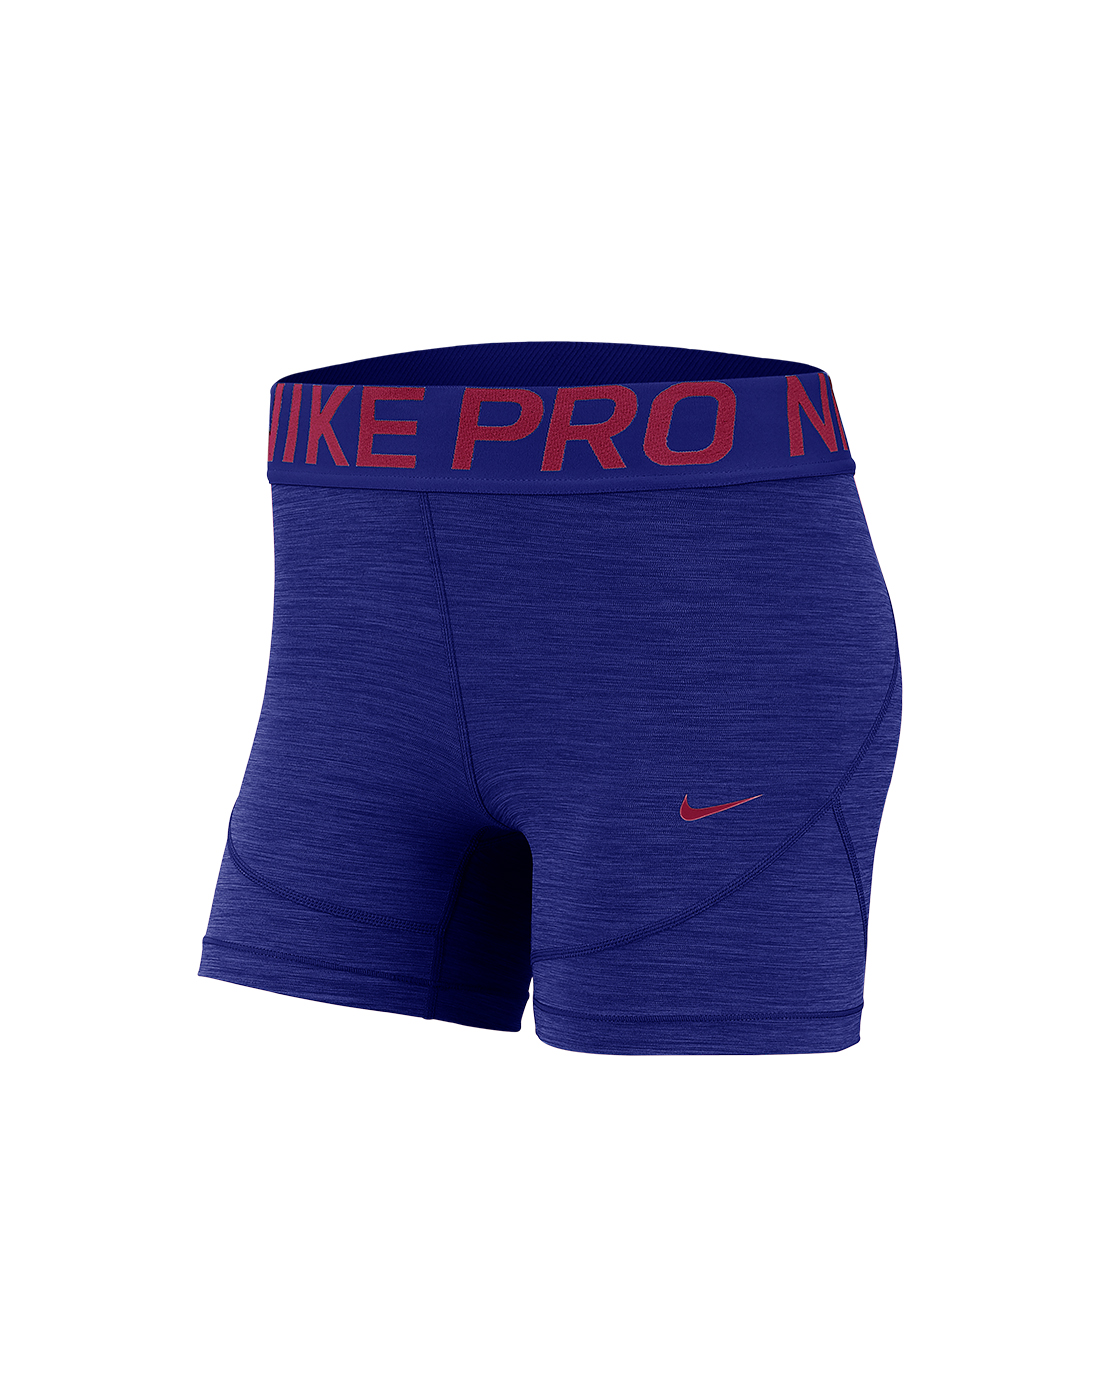 Cósmico resistirse eficientemente Nike Womens Pro 365 5 inch Shorts - Navy | Life Style Sports IE